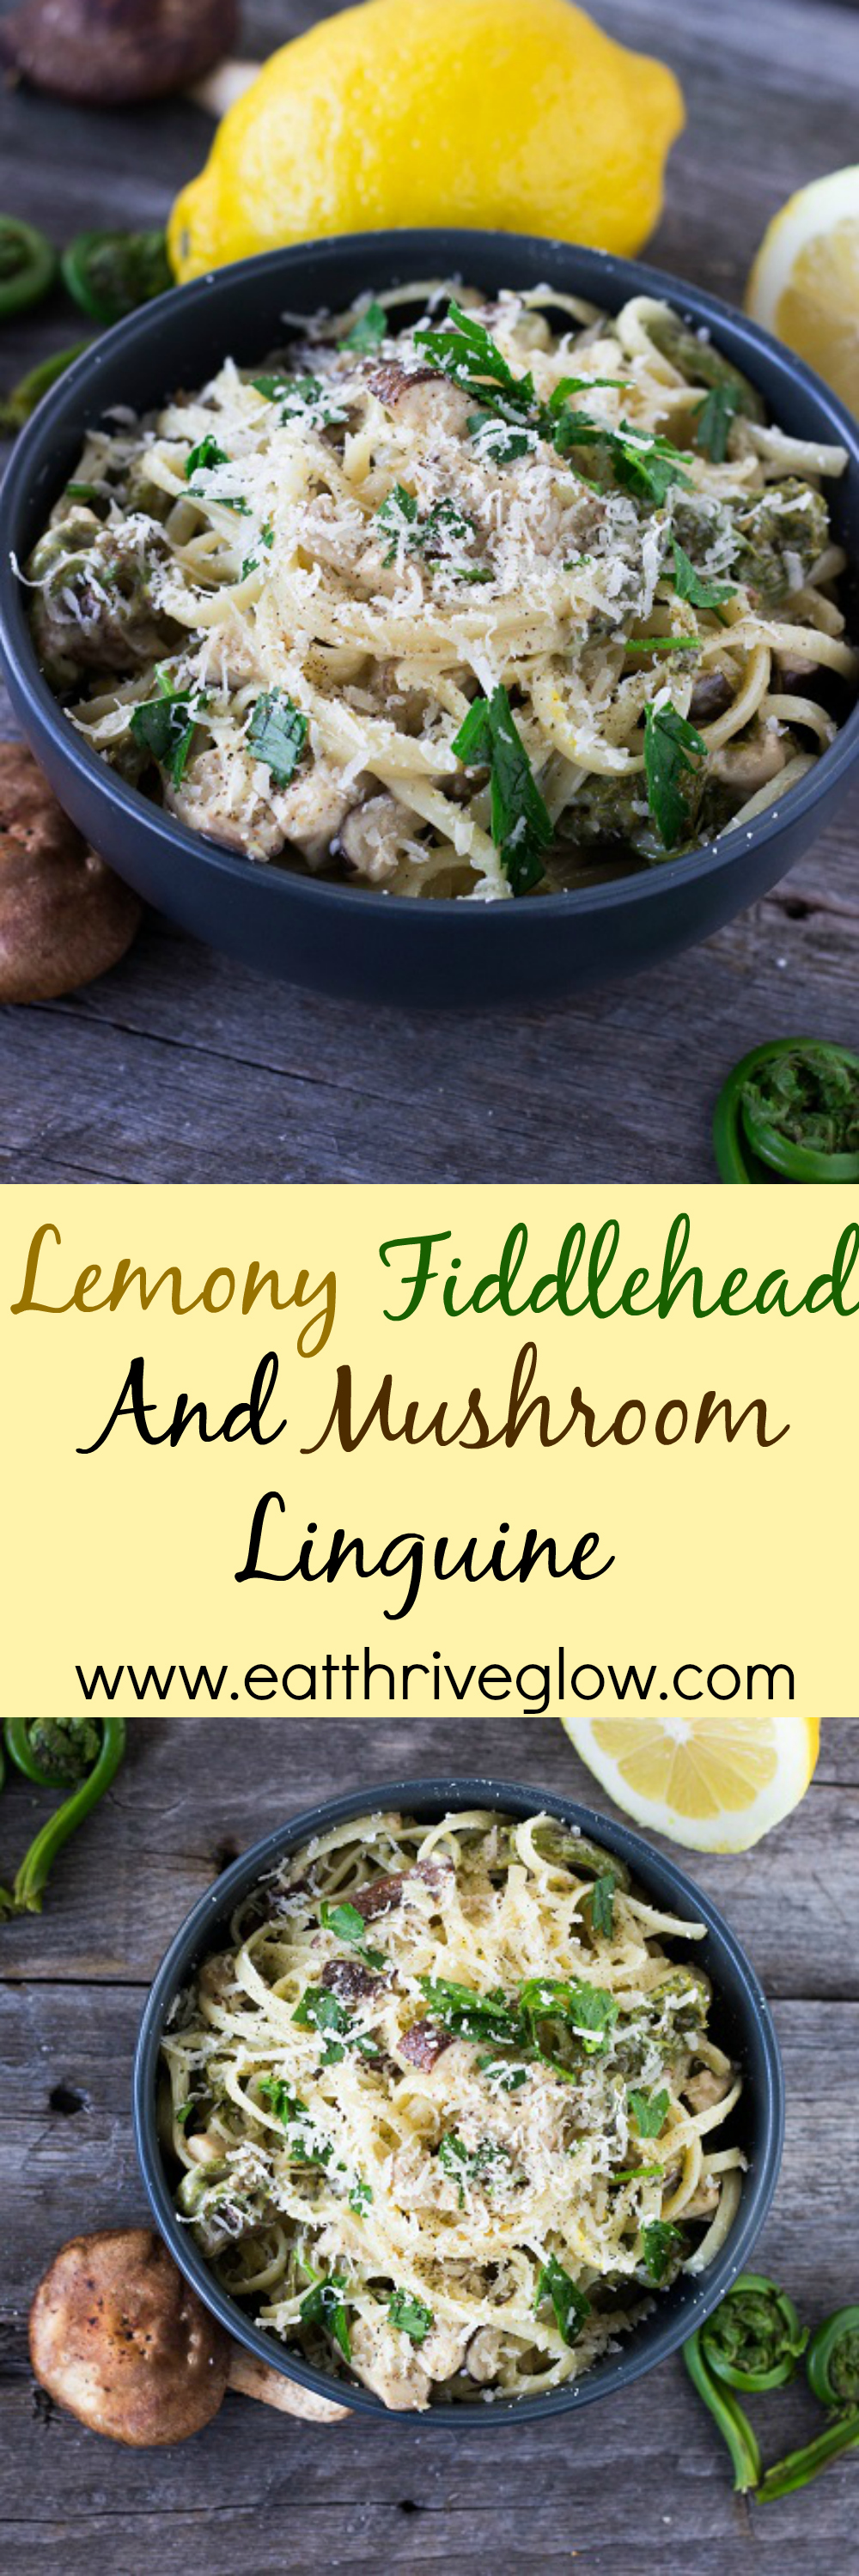 Lemony Fiddlehead and Mushroom Linguine - Eat Thrive Glow